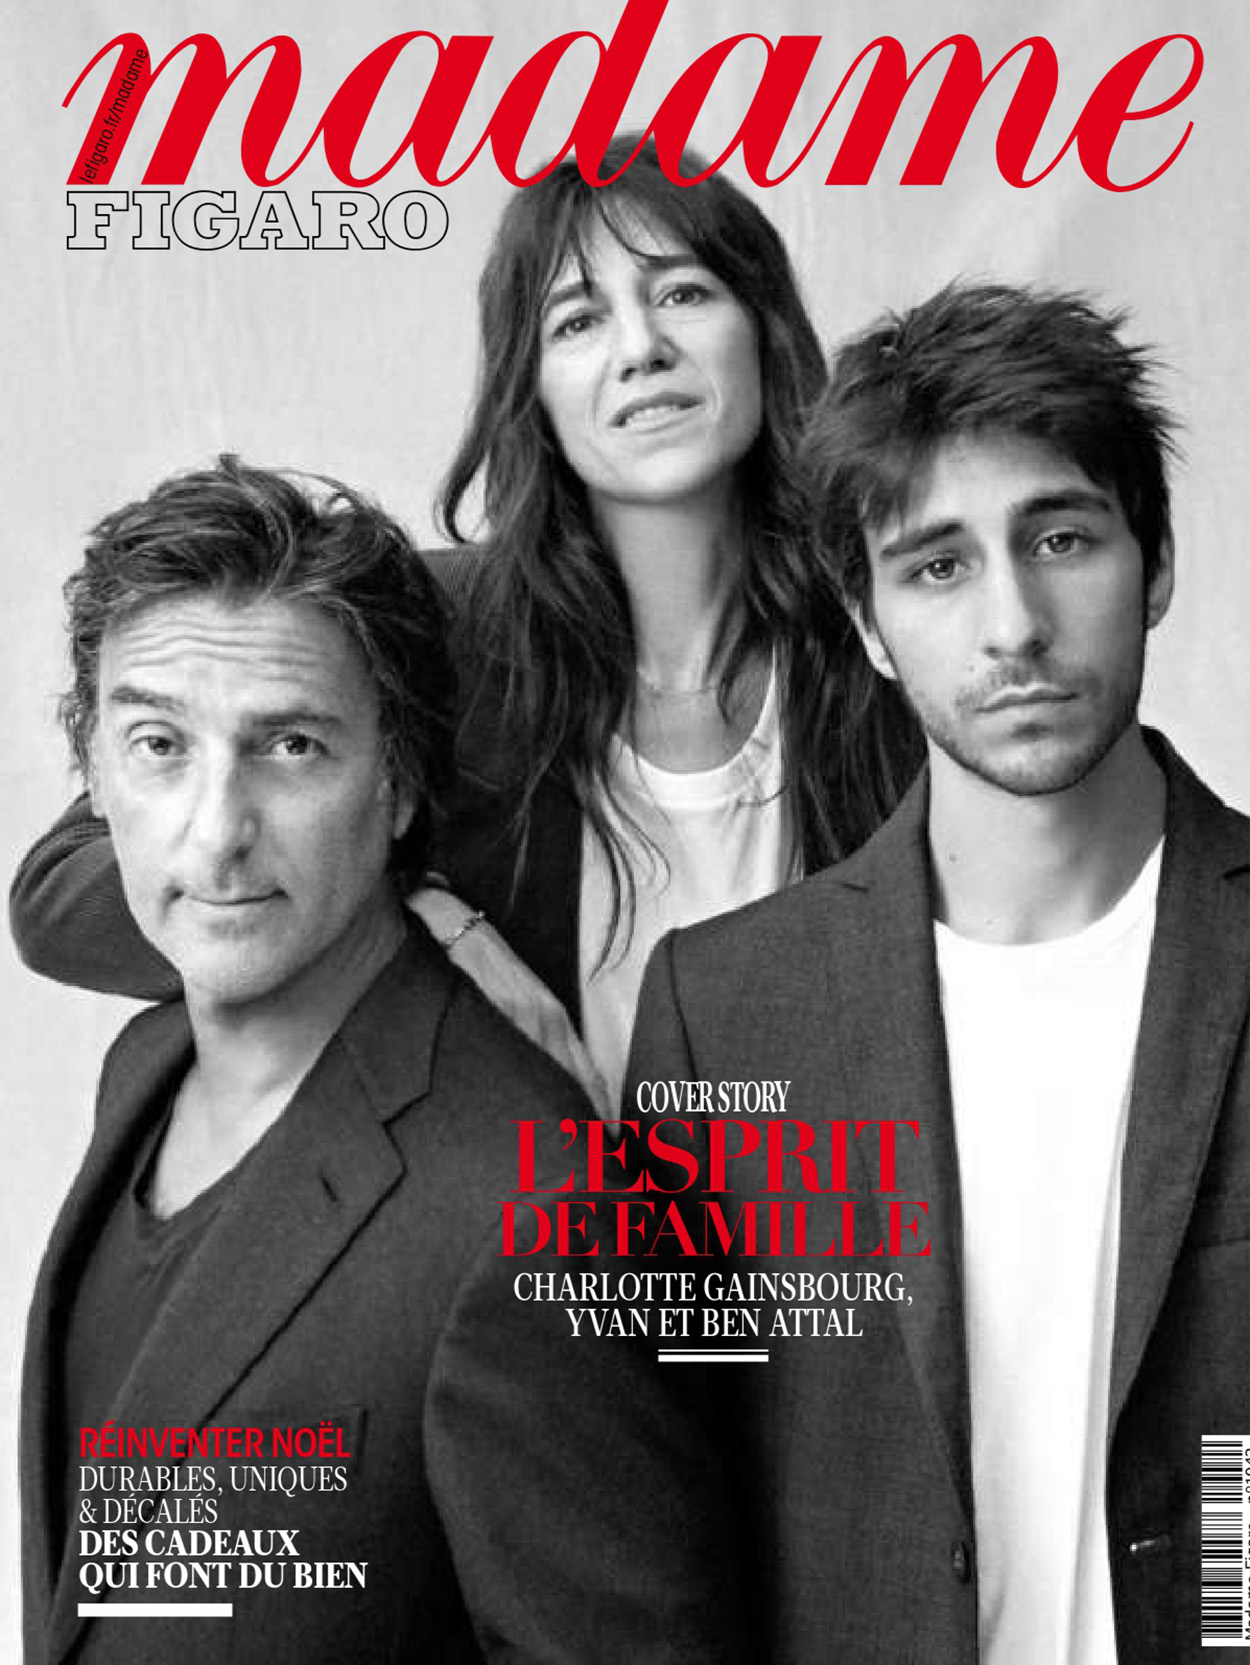 Charlotte Gainsbourg, Yvan Attal and Ben Attal cover Madame Figaro November 12th, 2021 by Xavi Gordo